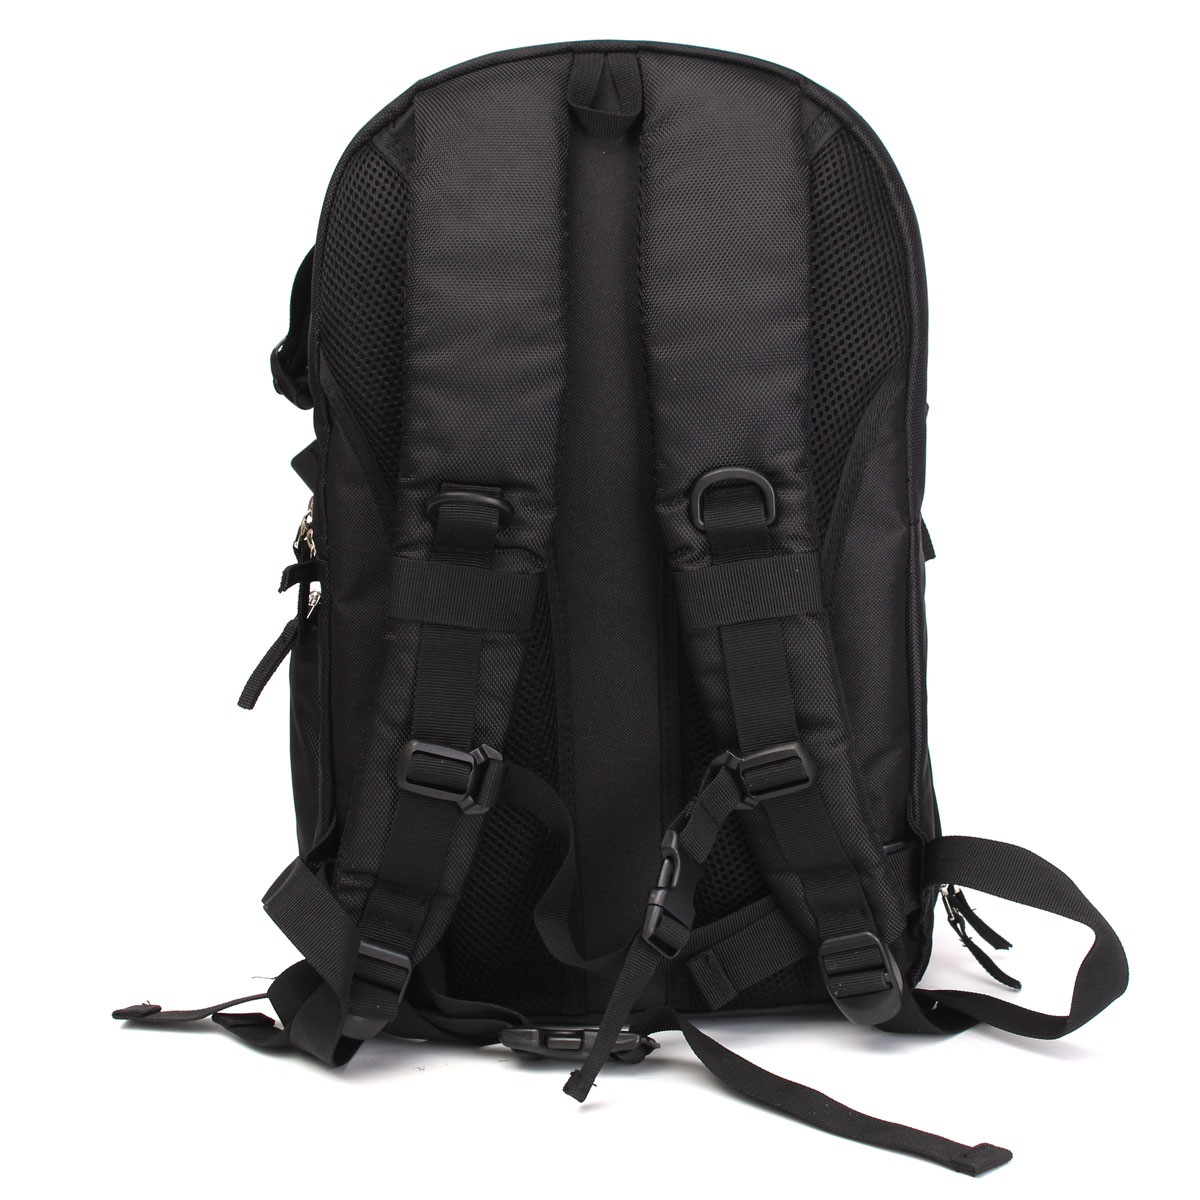 Nylon Waterproof Shockproof Camera Laptop Bag Lens Case Backpack For Canon Nikon SLR DSLR Camera 10